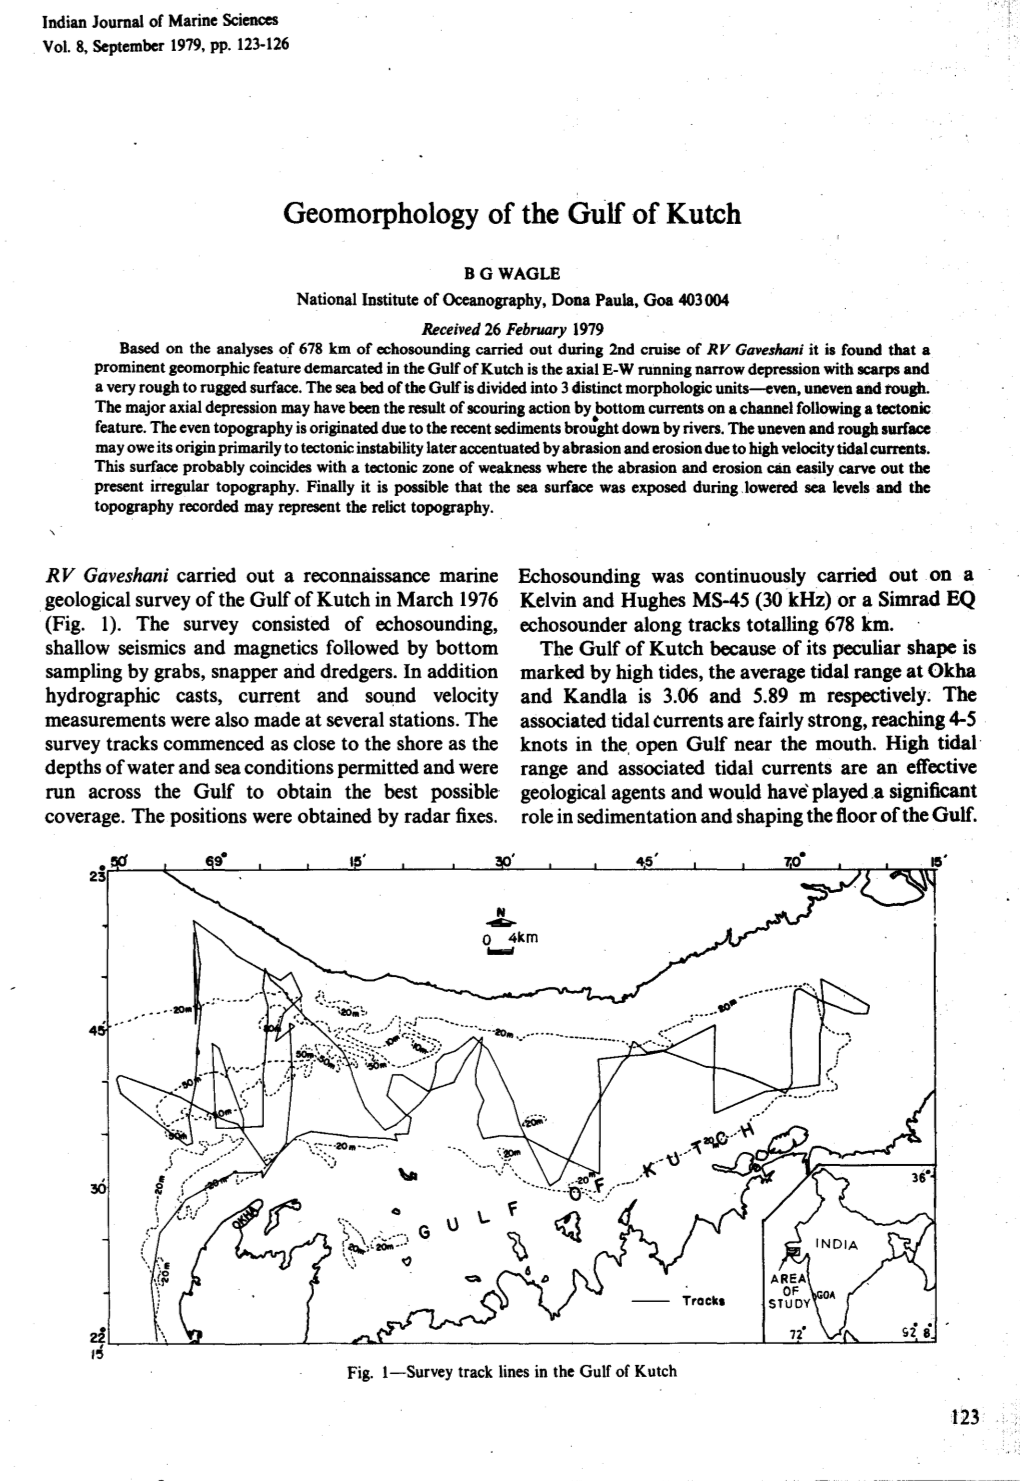 Geomorphology of the Gulf of Kutch